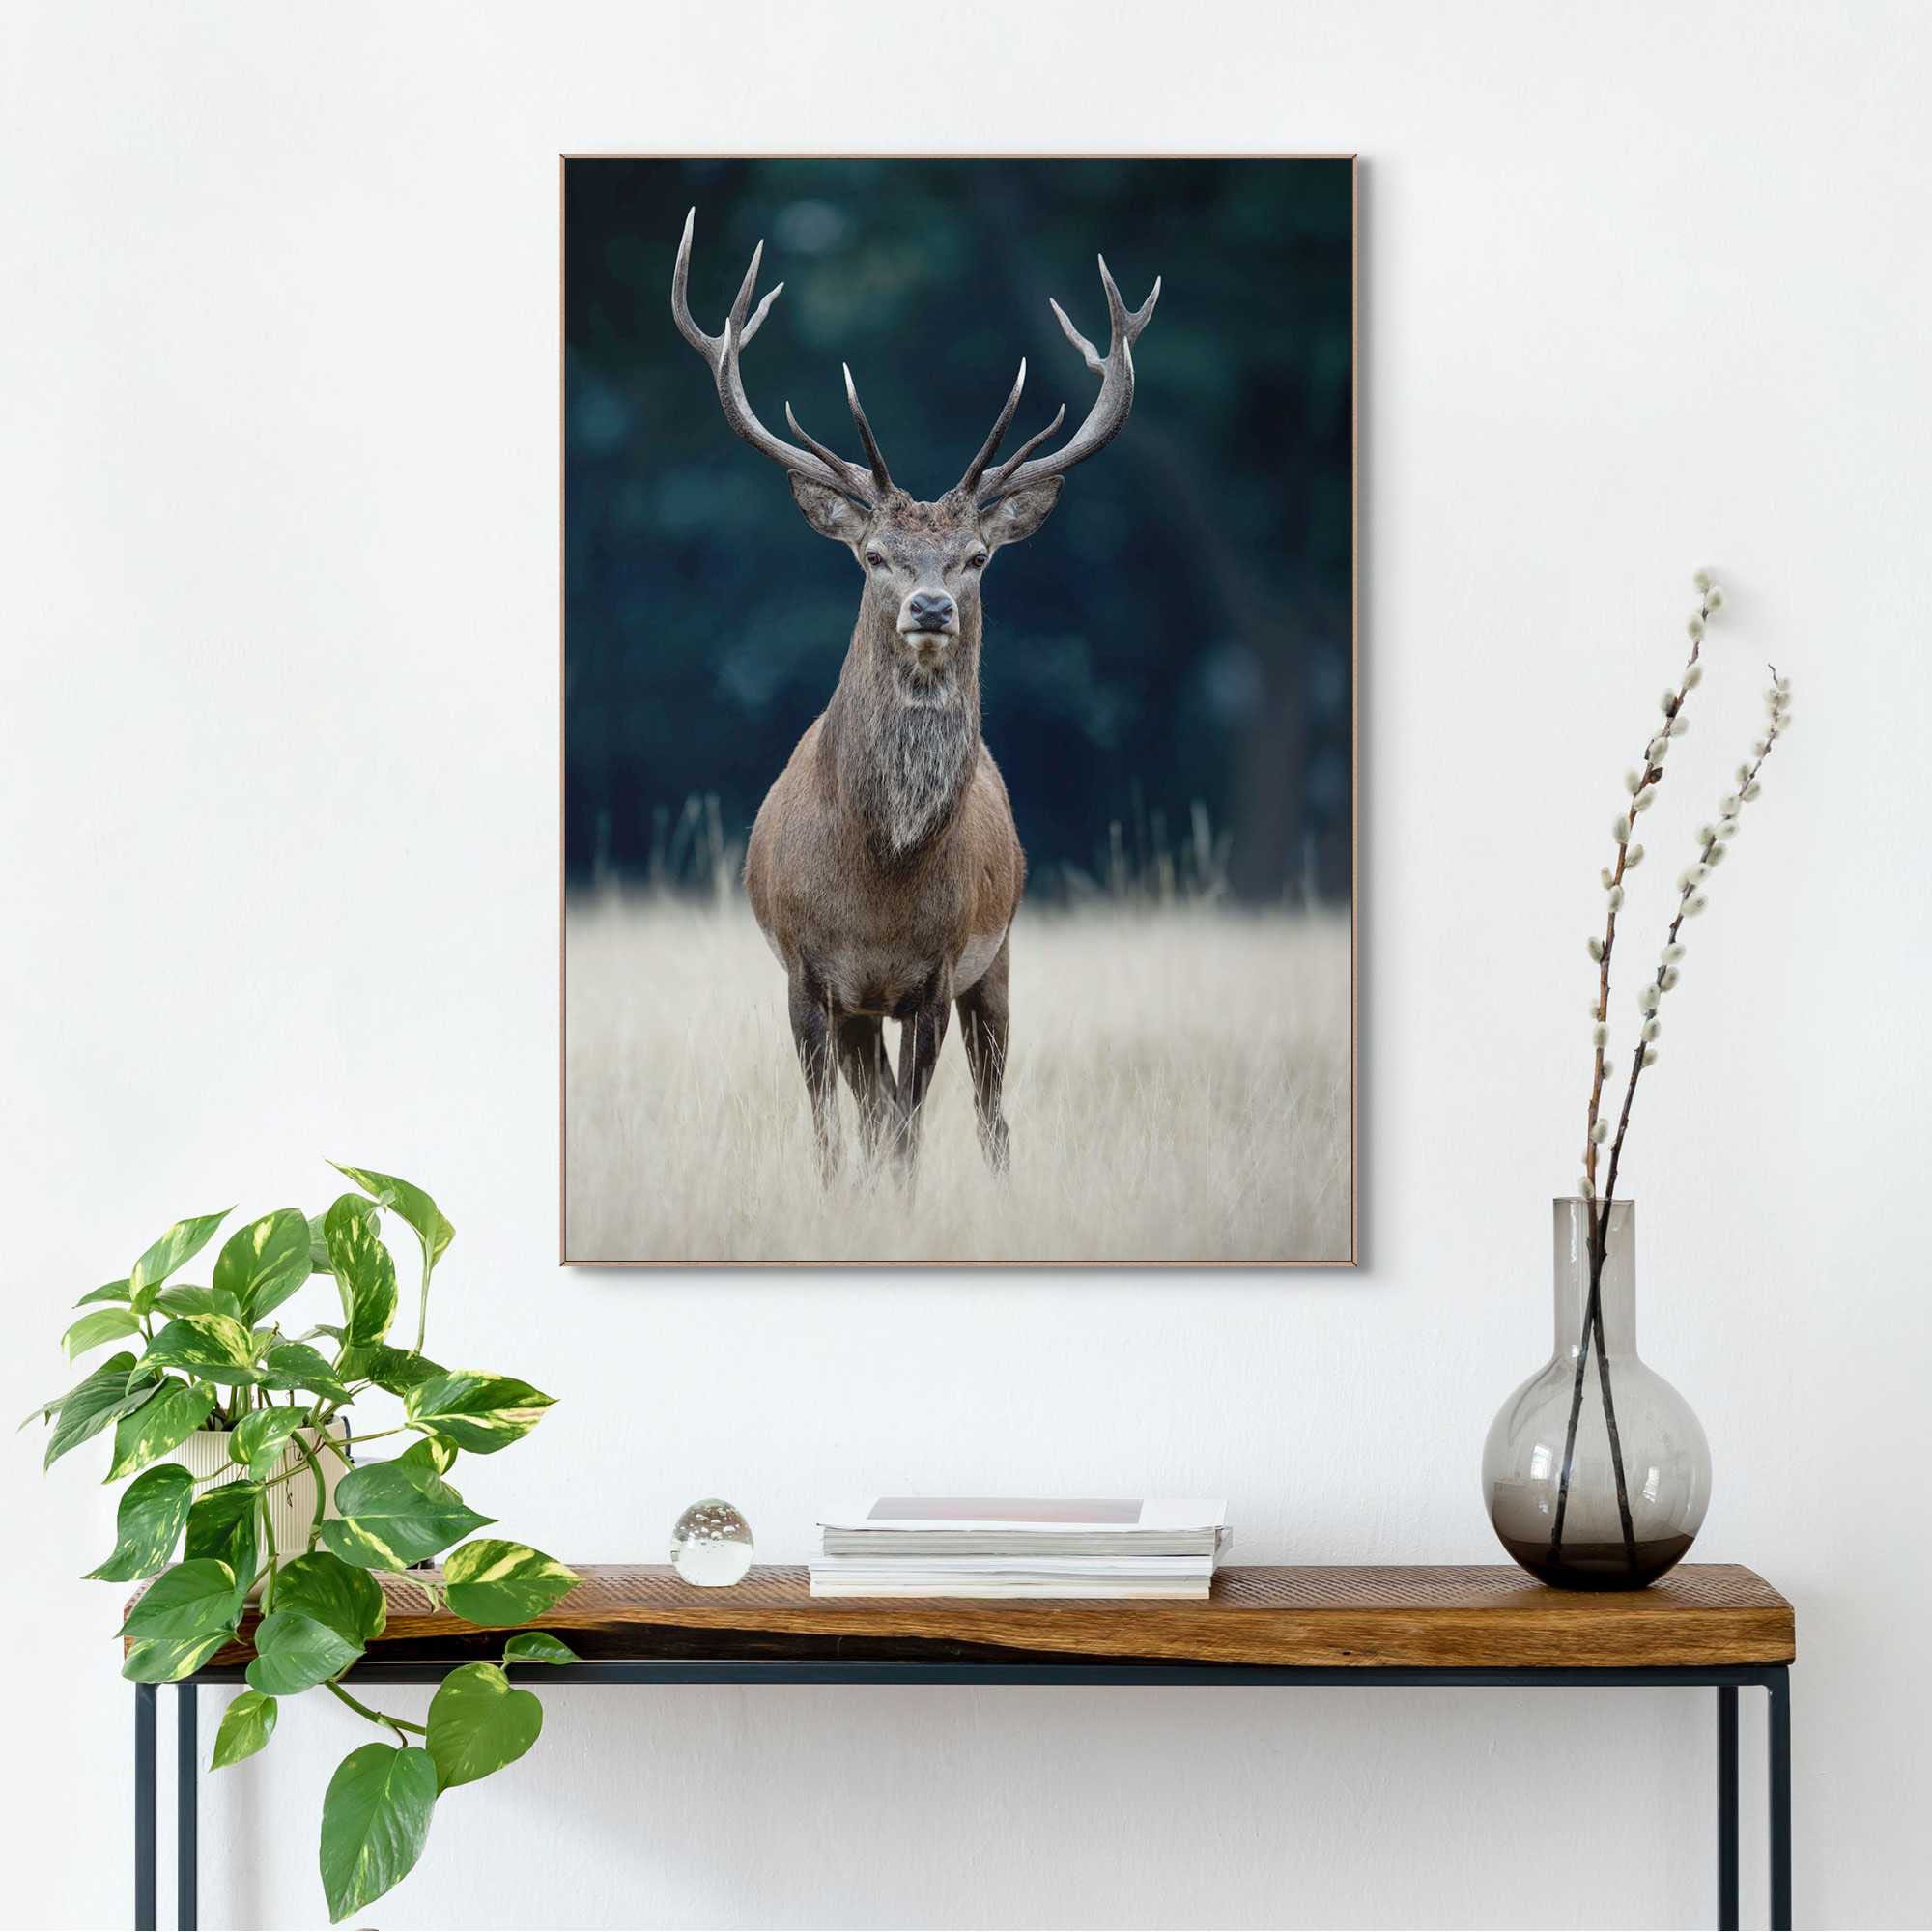 »Slim bequem kaufen 50x70 Deer« Wandbild Frame Reinders! Wood